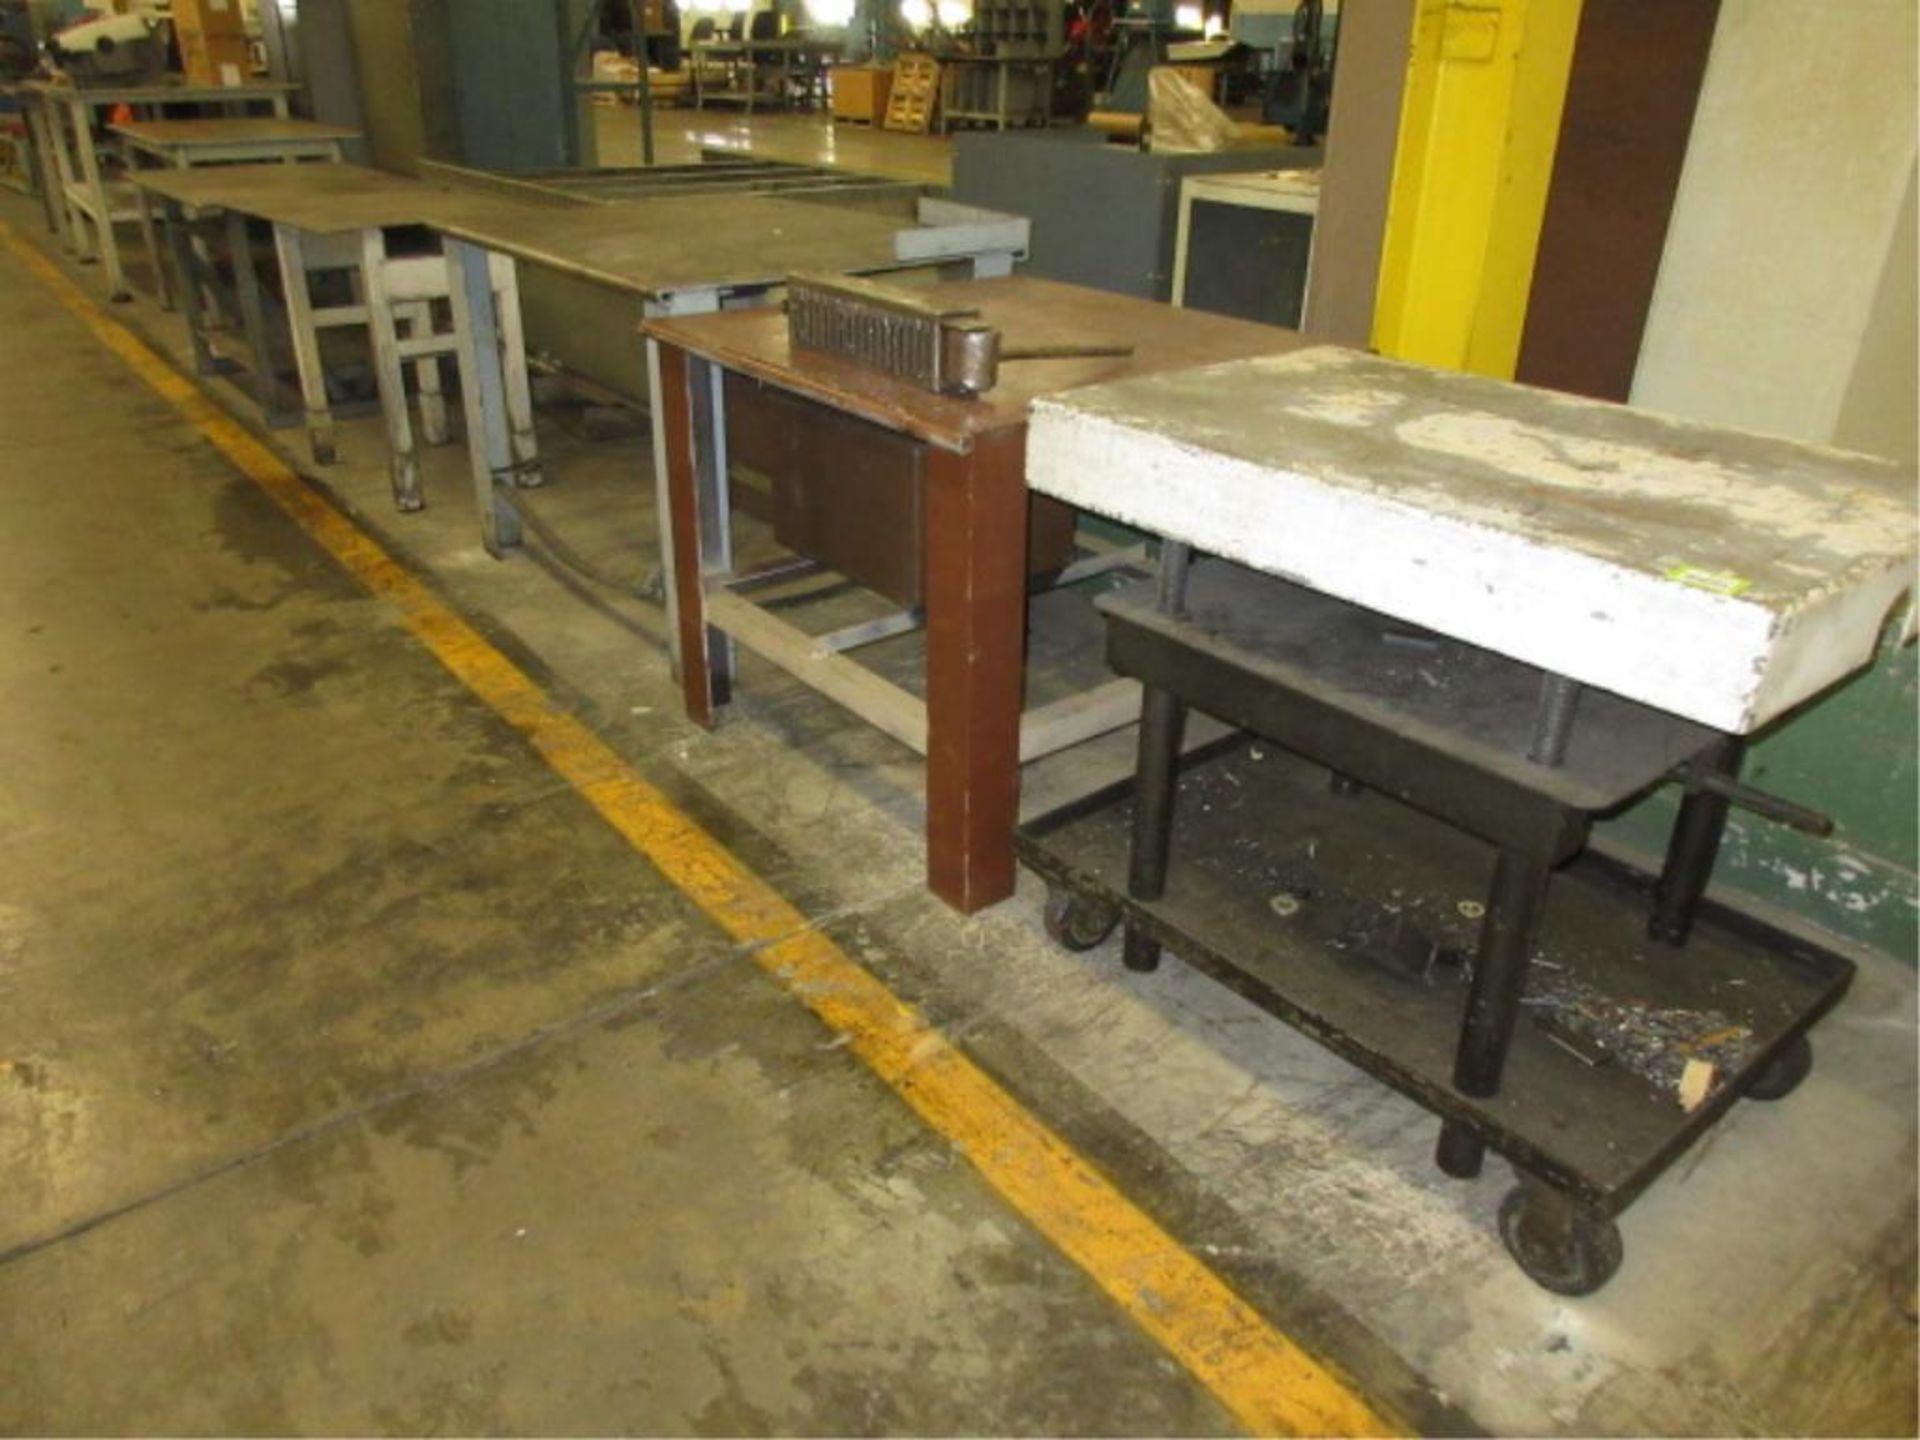 Shop Tables. Lot (7pcs) Heavy Duty Steel Shop Tables. HIT# 2179043. Loc: main floor. Asset Located